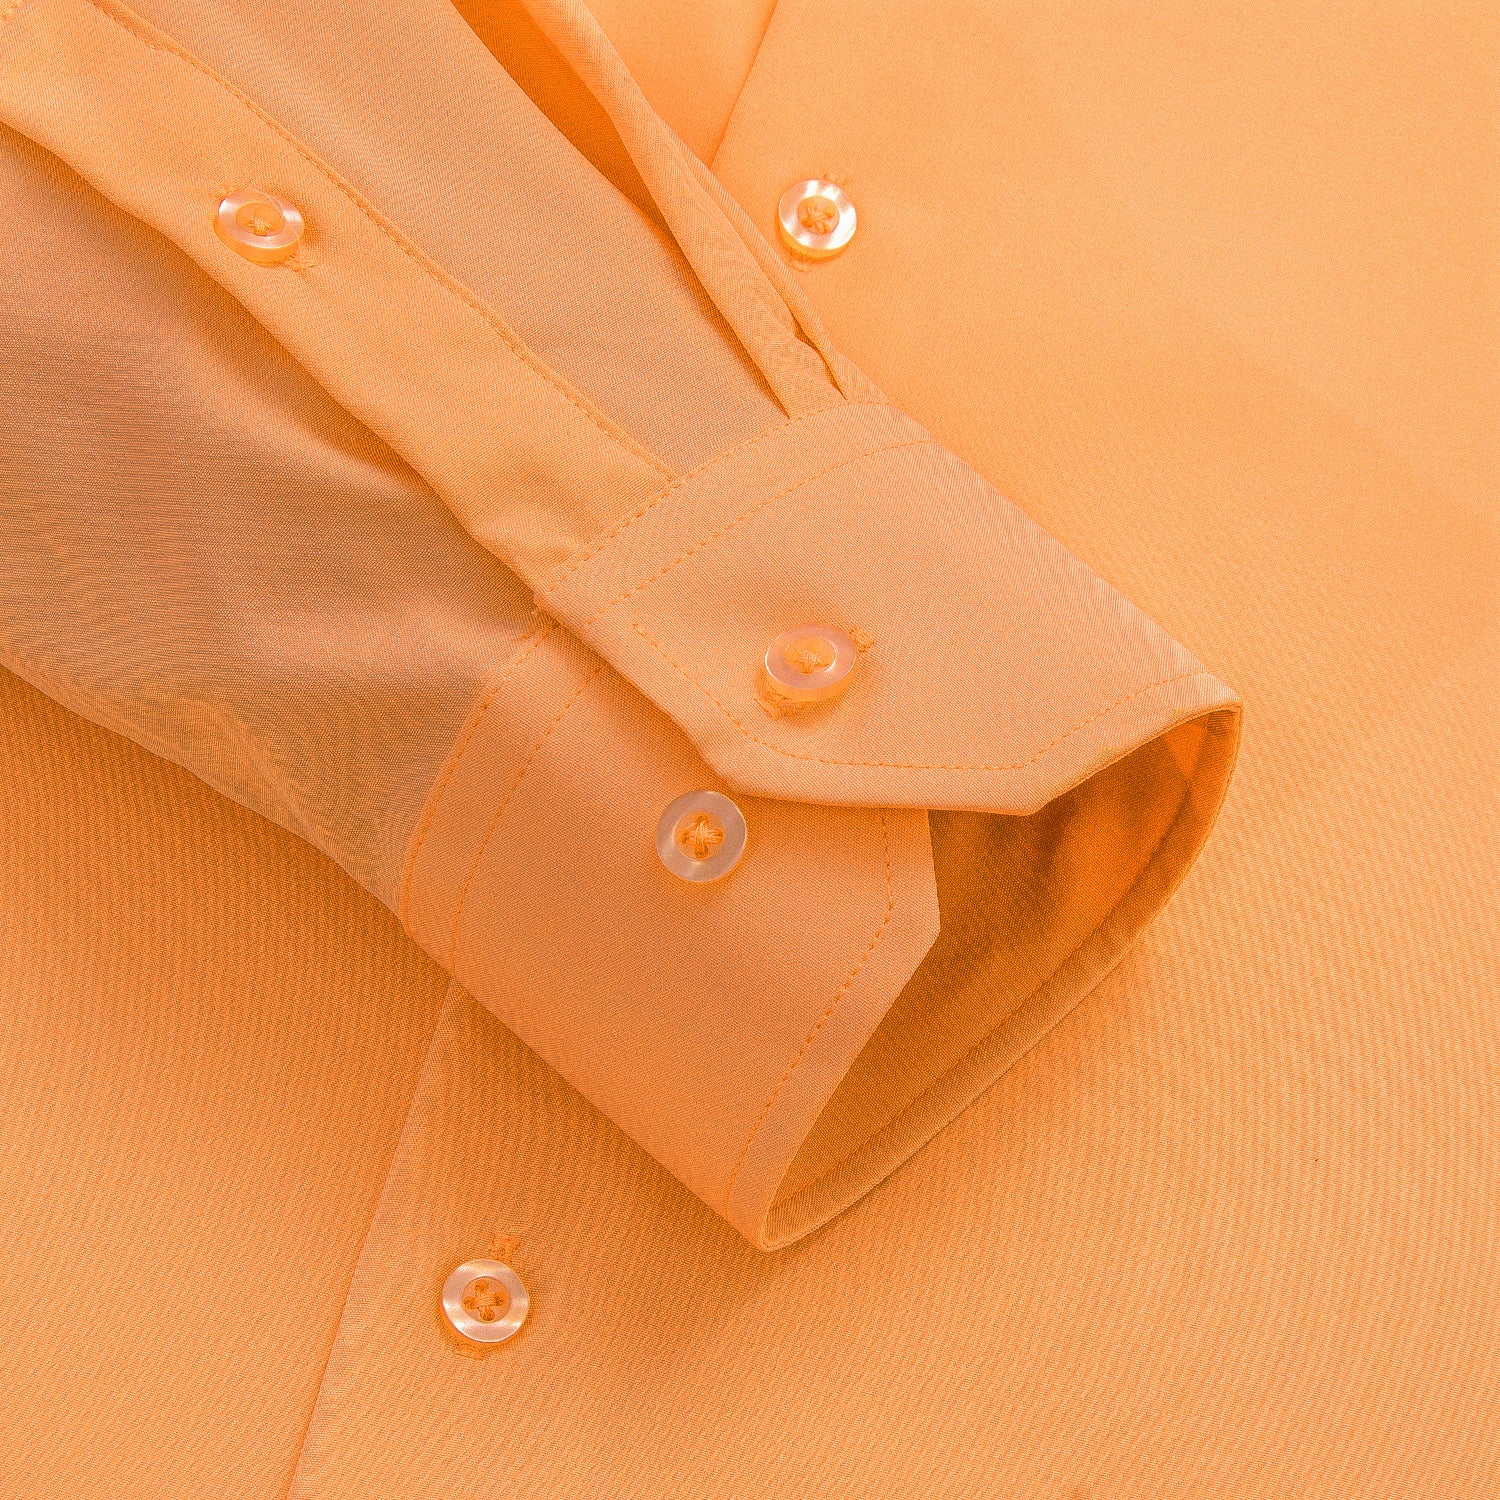 New Orange Solid Stretch Men's Long Sleeve Shirt